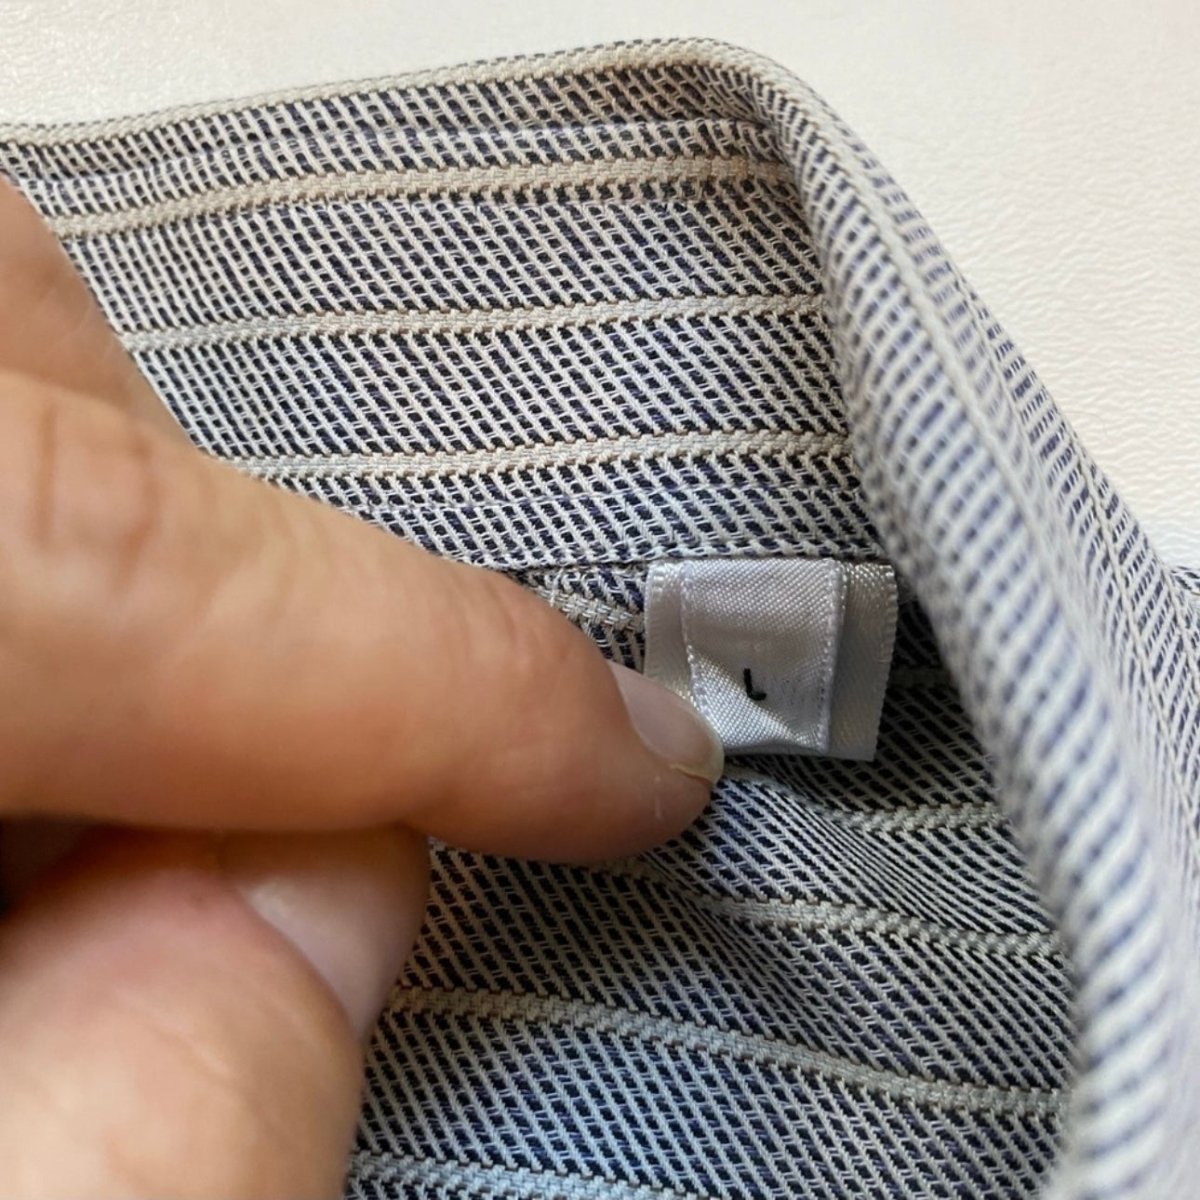 Armani Collezioni - Armani Collezioni Size L Button Up Collared Pinstripe 100% Cotton Dress Shirt - Shirts - Afterglow Market